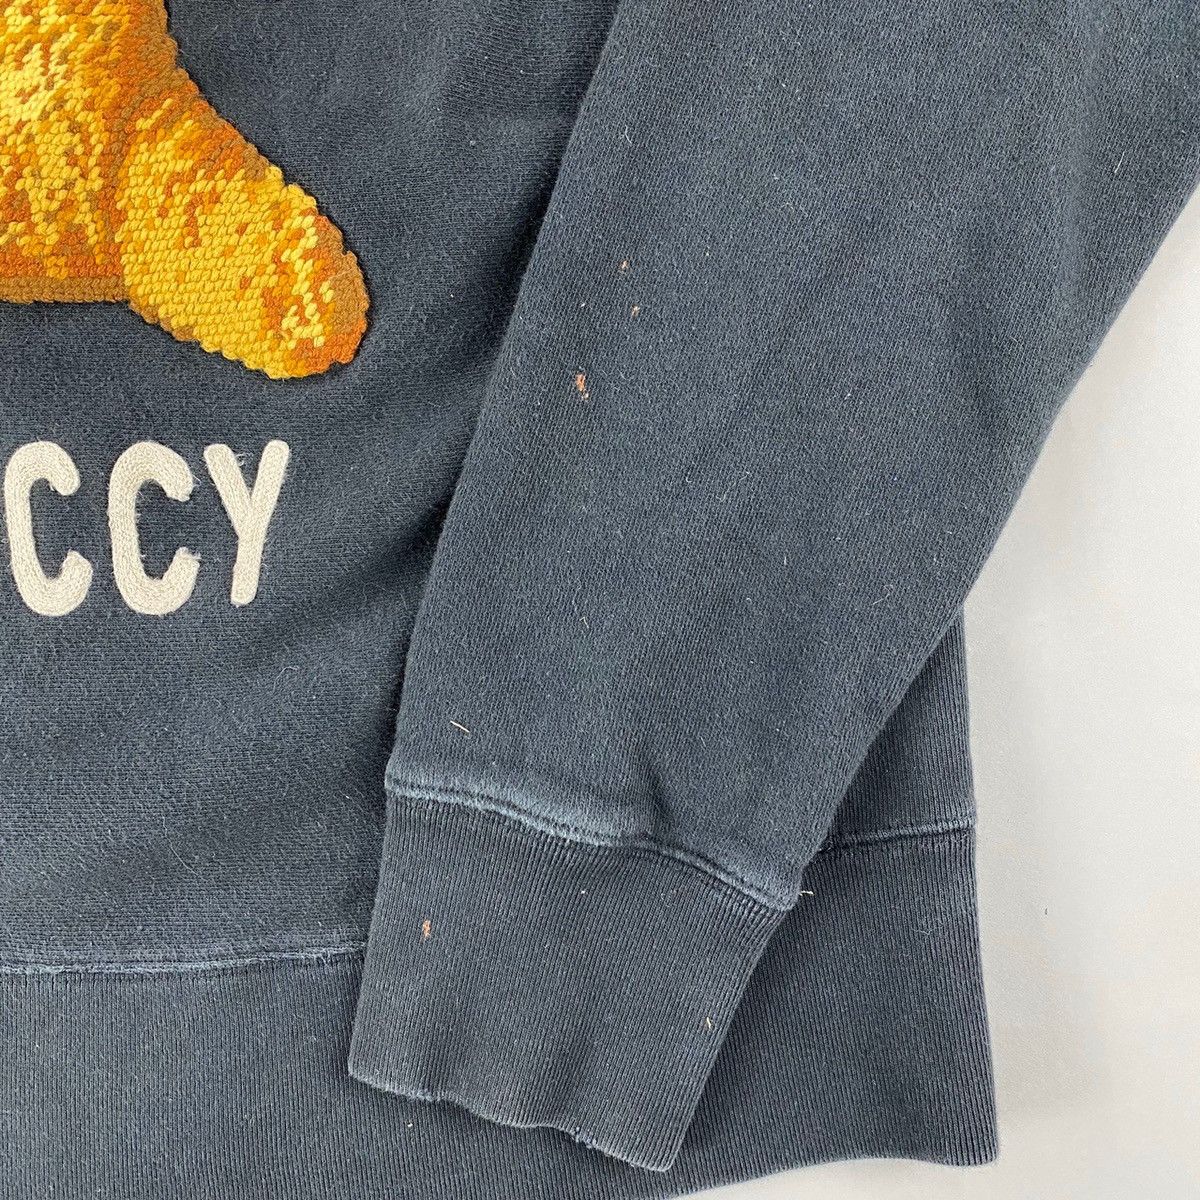 Gucci Teddy bear sweatshirt Size US M / EU 48-50 / 2 - 2 Preview